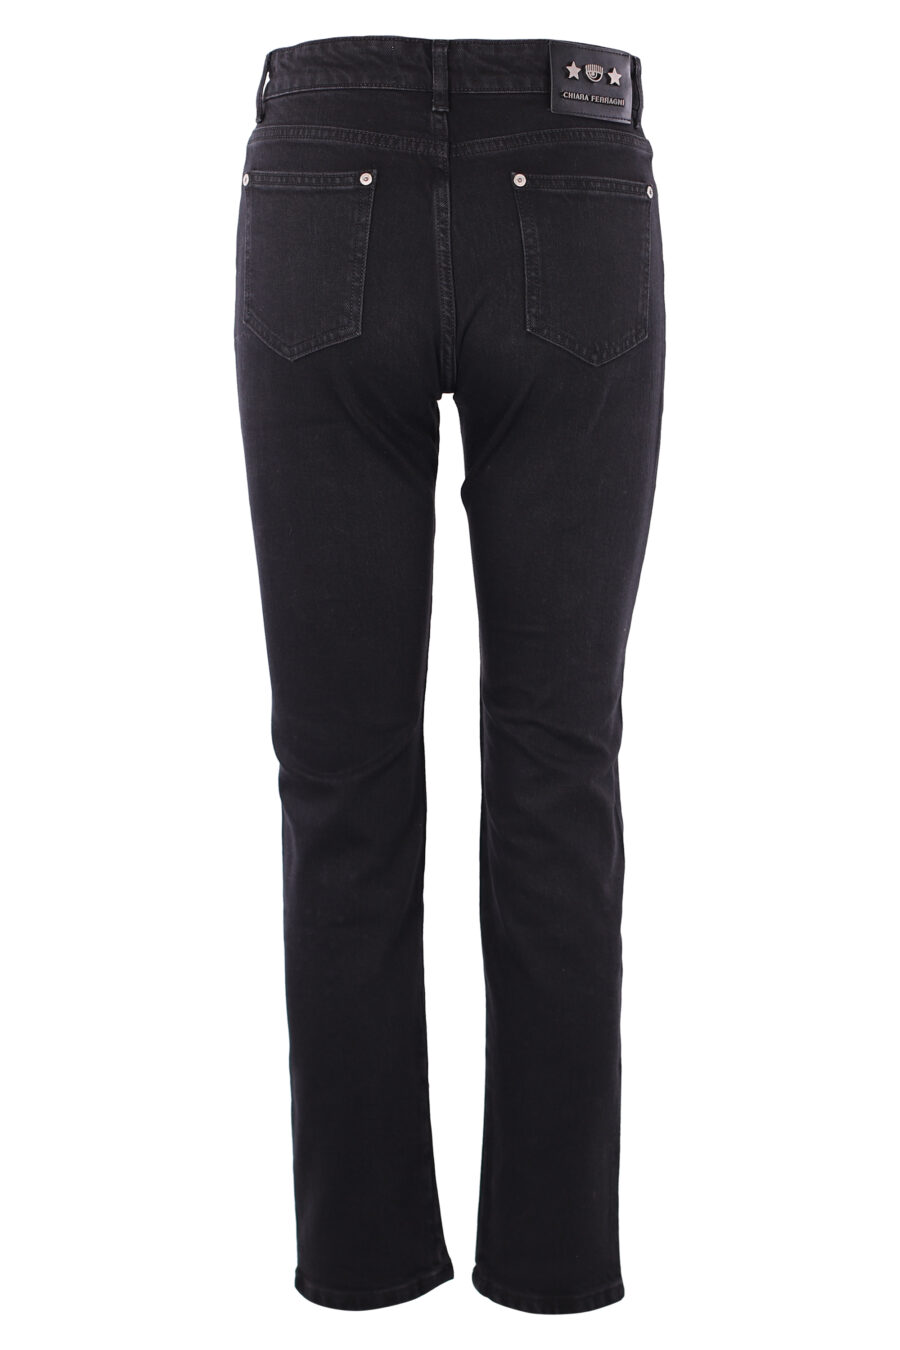 Black jeans with rhinestones - IMG 6316